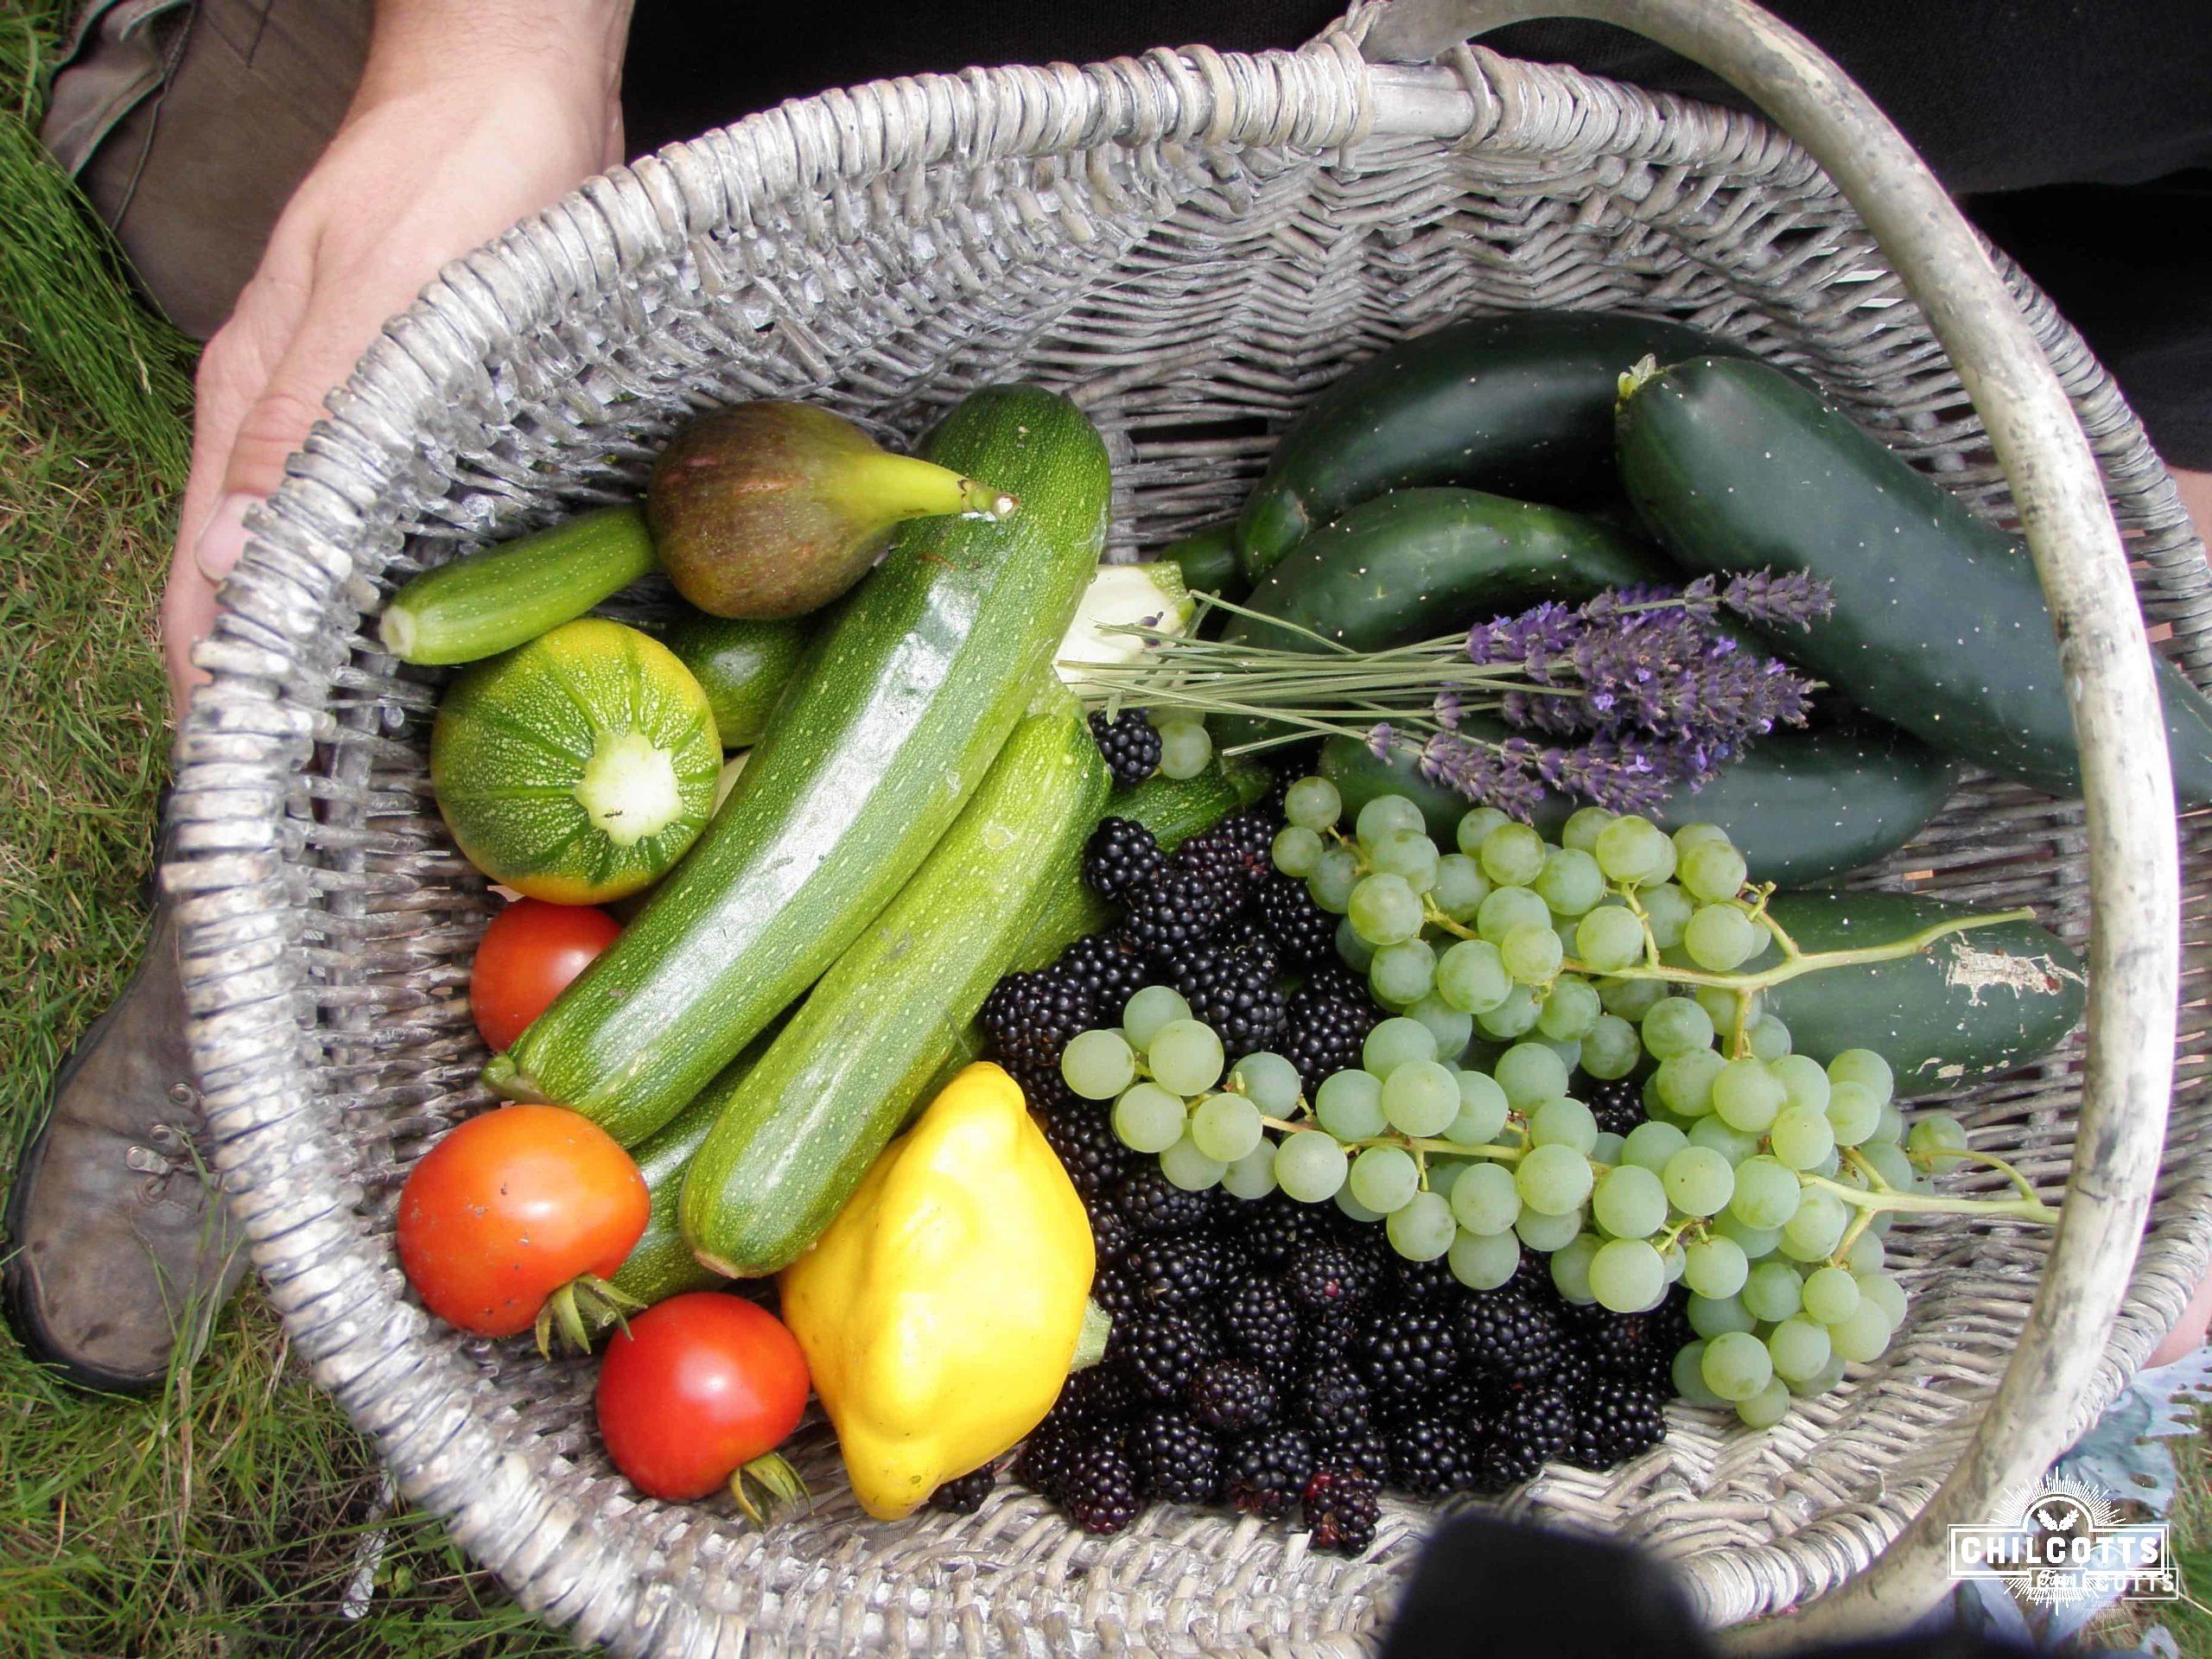 Basket of produce from Chilcotts Farm